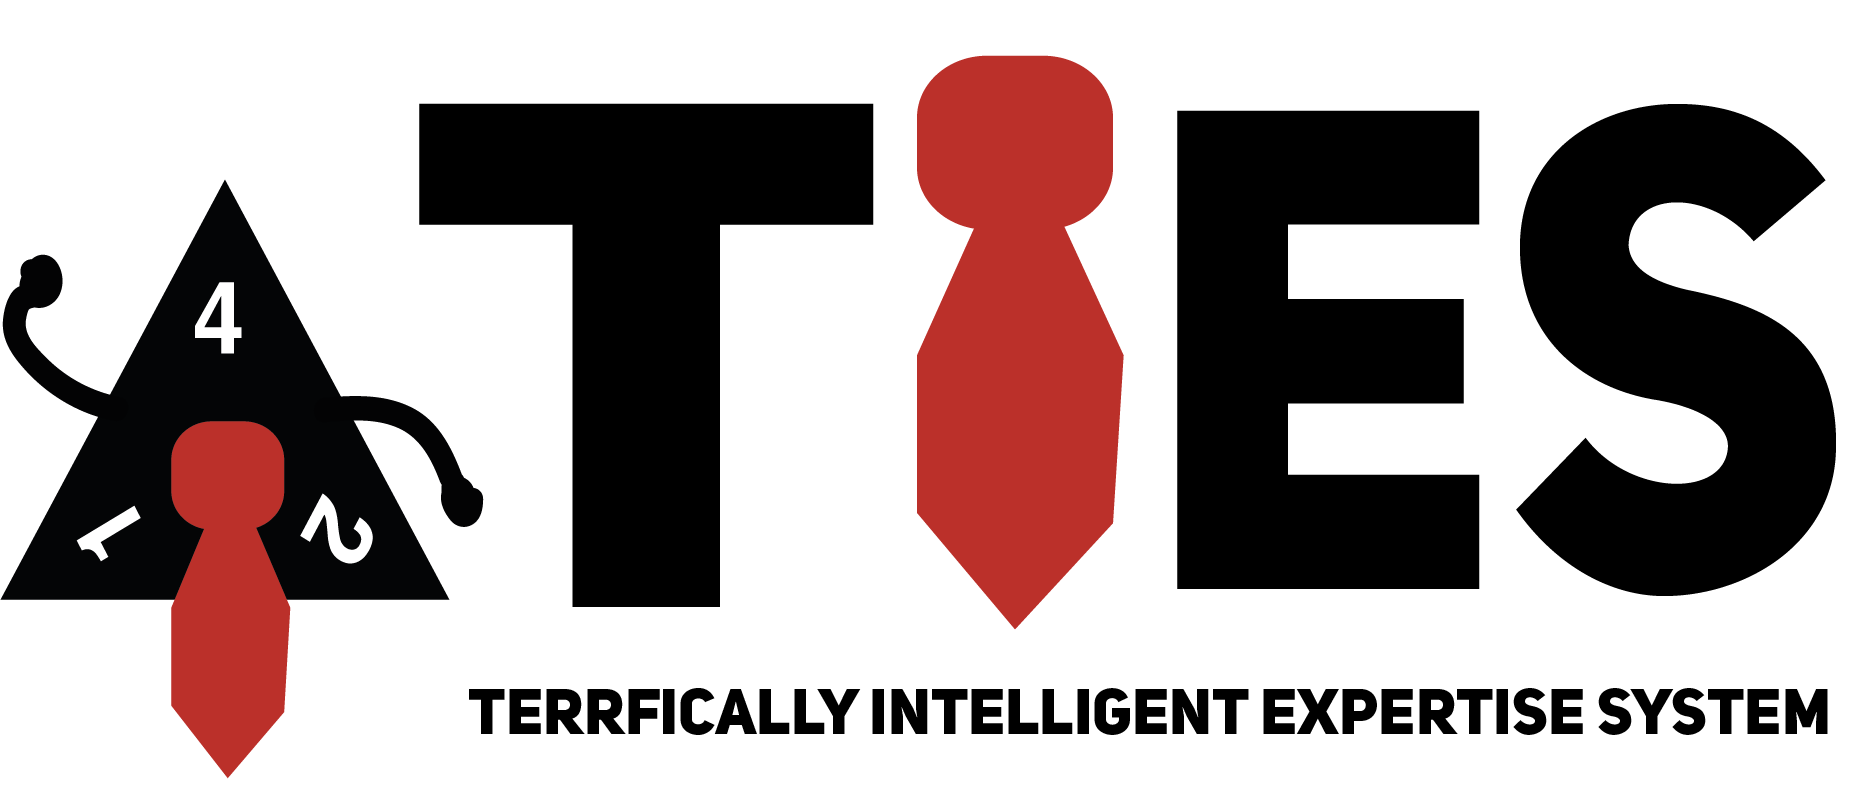 TIES (Terrifically Intelligent Expertise System) v0.1